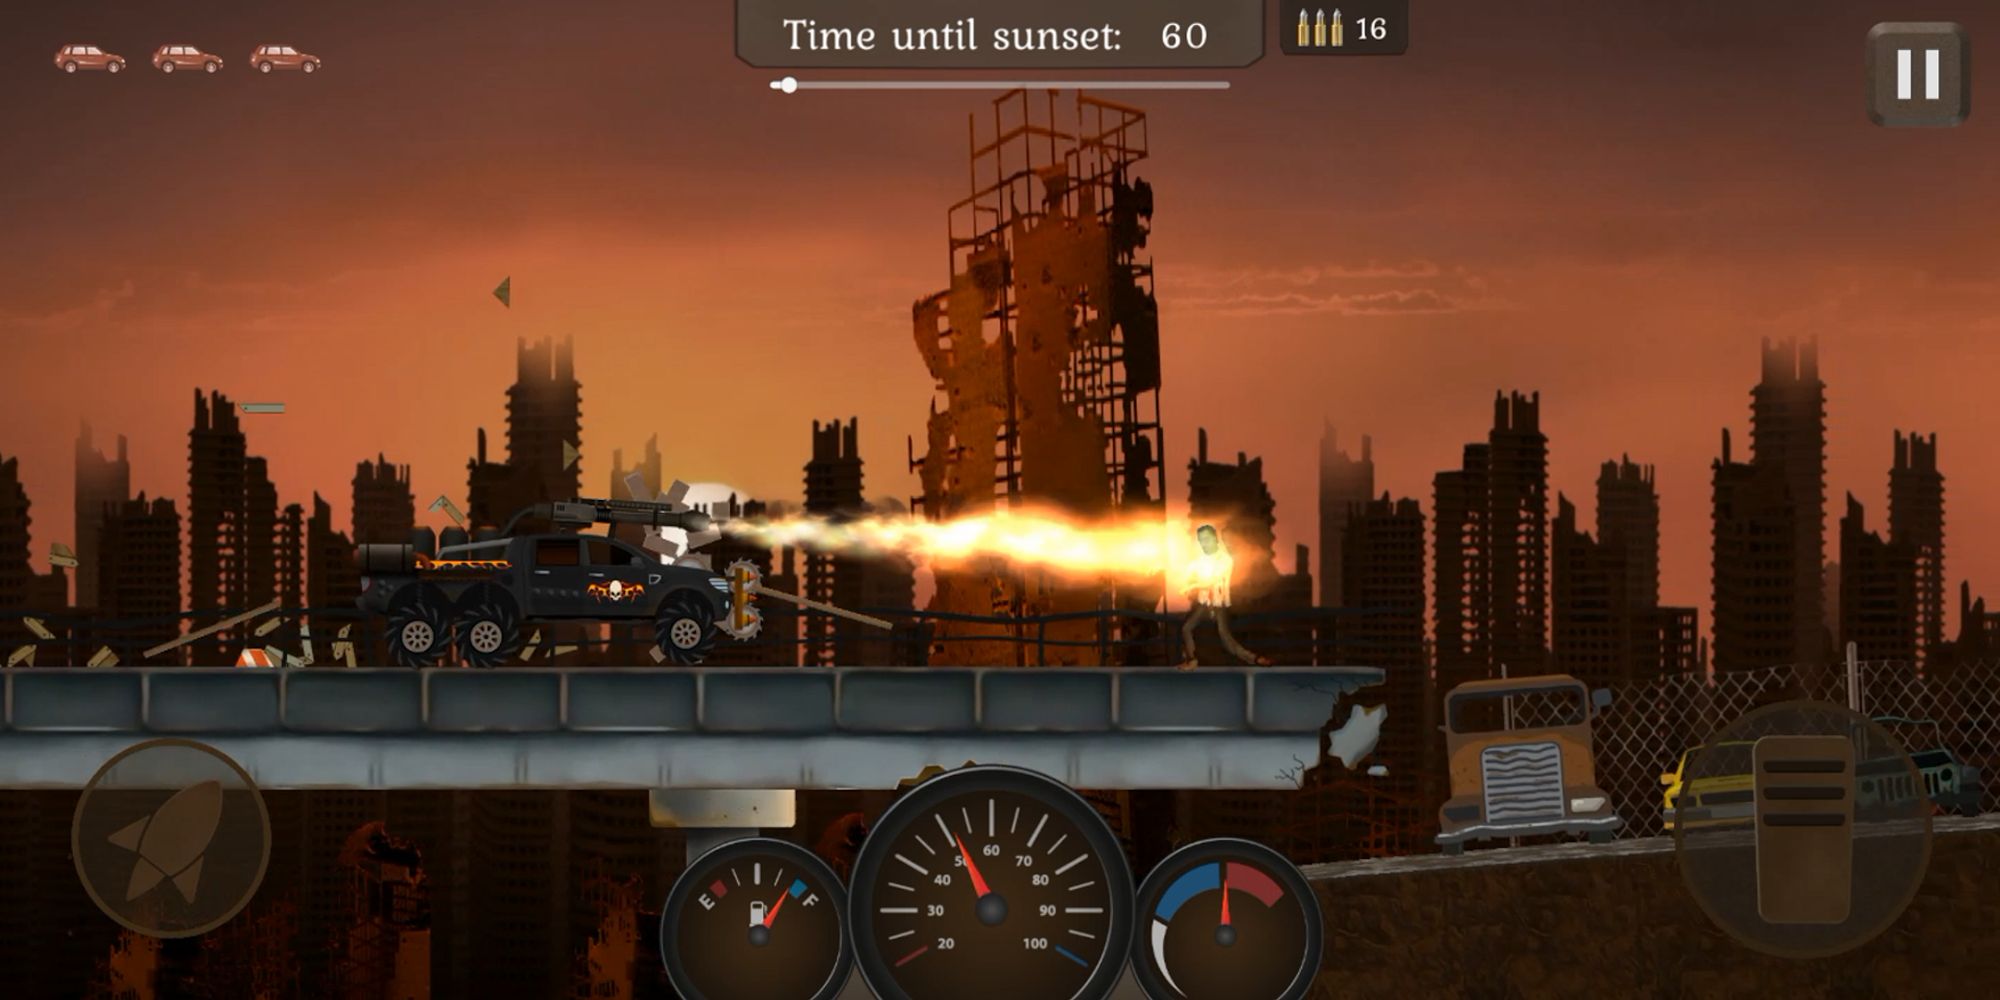 Zombie Metal Racing - Android game screenshots.